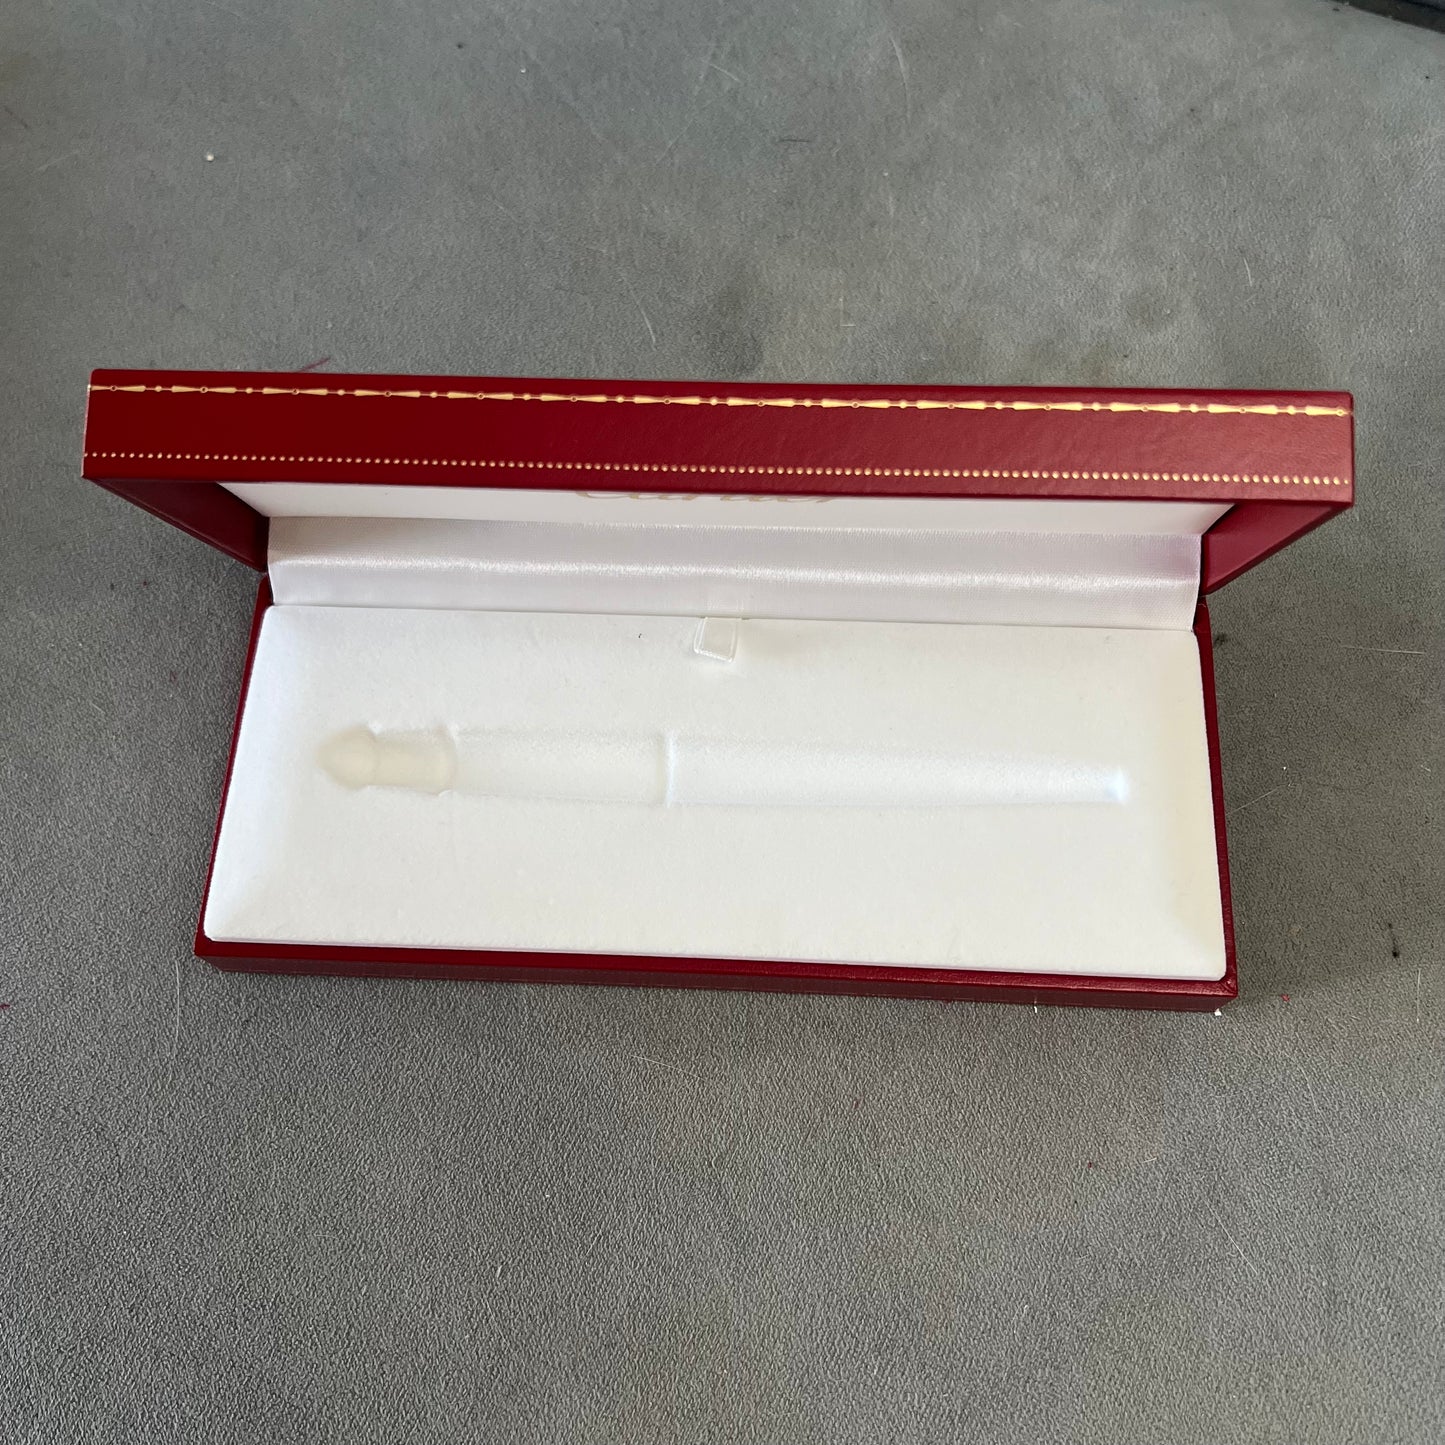 CARTIER STYLO BILLE DIABOLO Pen Box + Outer Box 7.15x3x1.40 inches